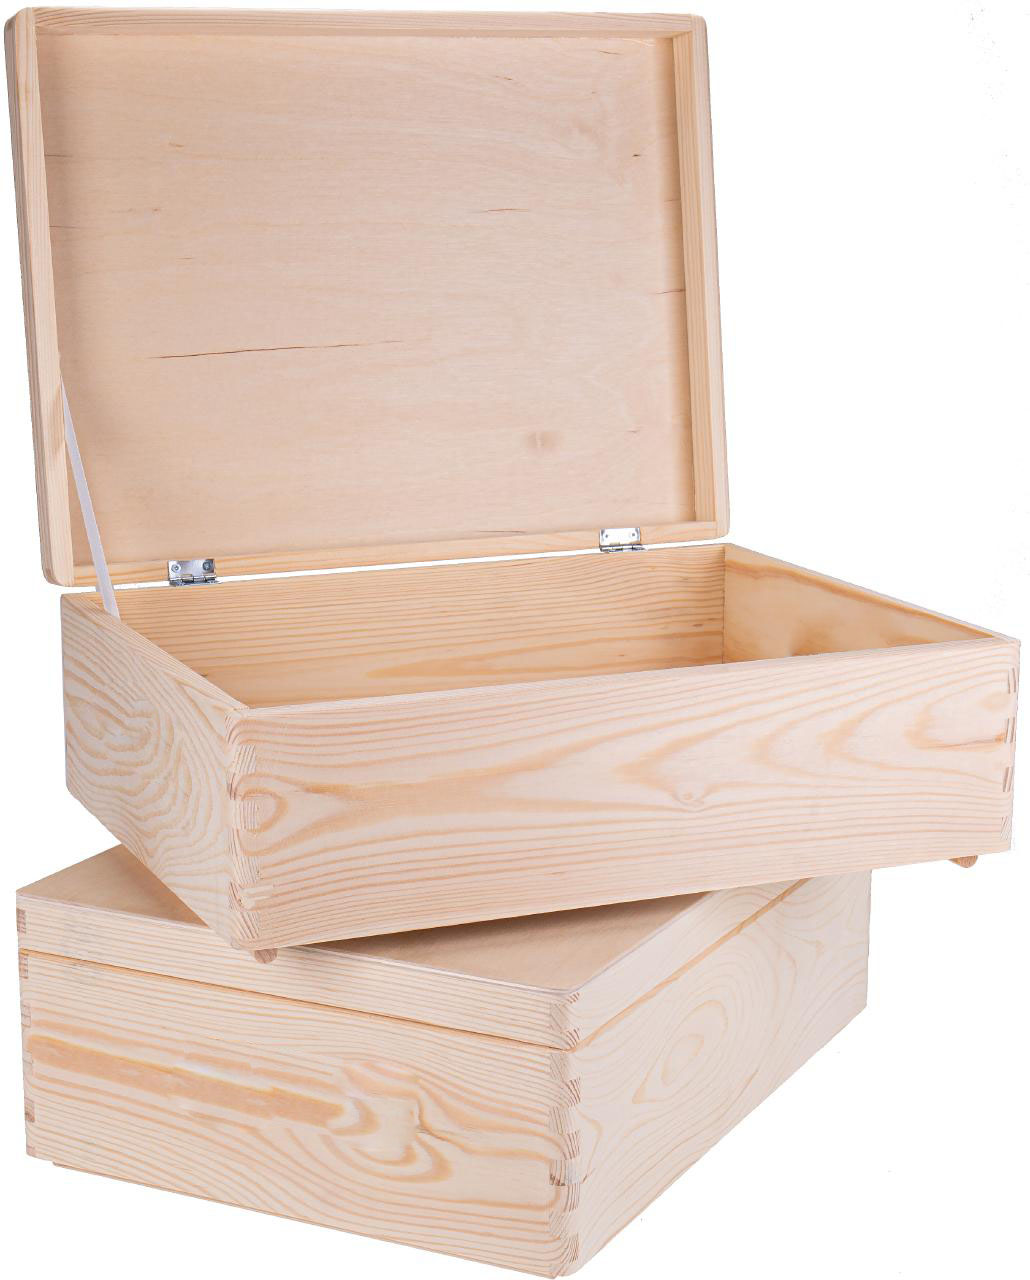 GroÃŸe Fichtenholz Kiste mit Klappdeckel